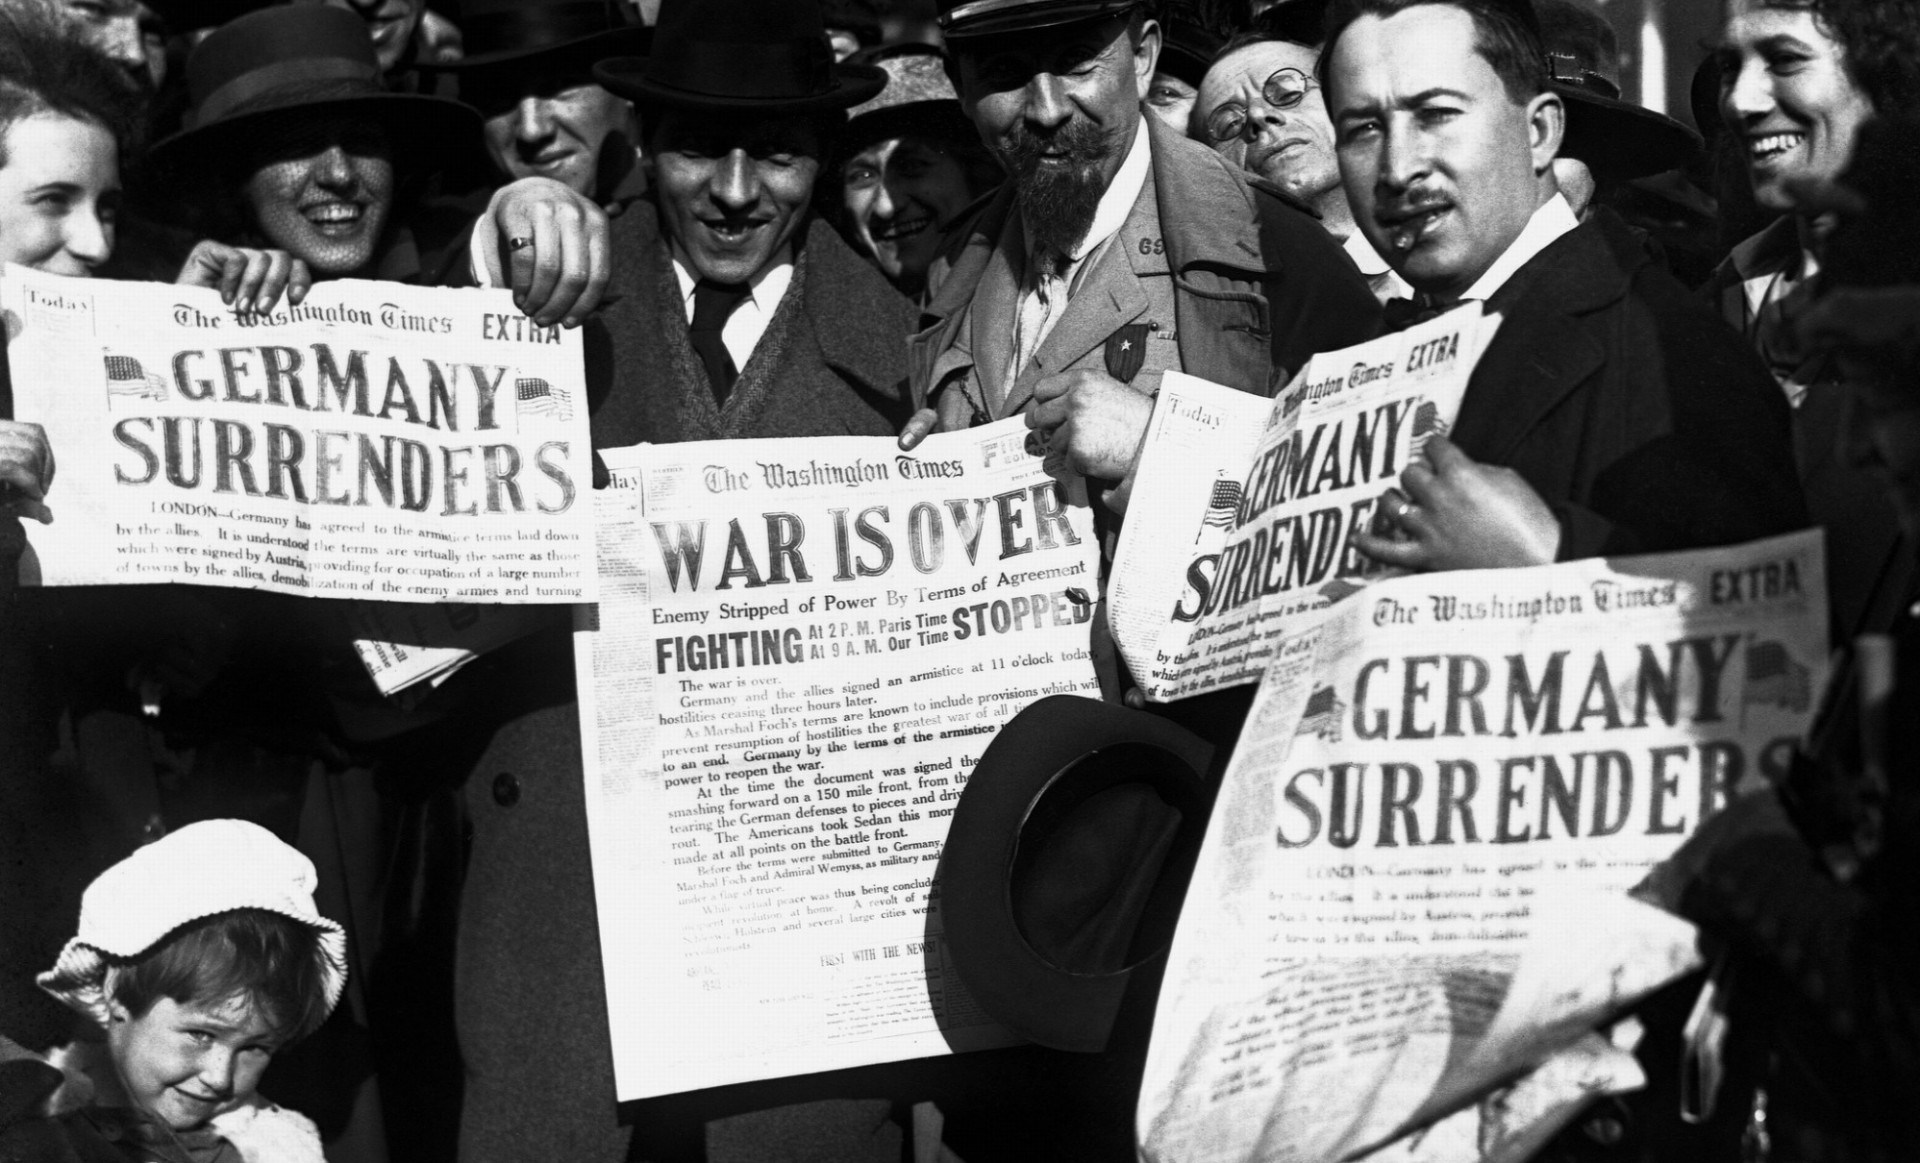 ewspaper headlines which announce the surrender of Germany, ending World War I, November 8, 1918.